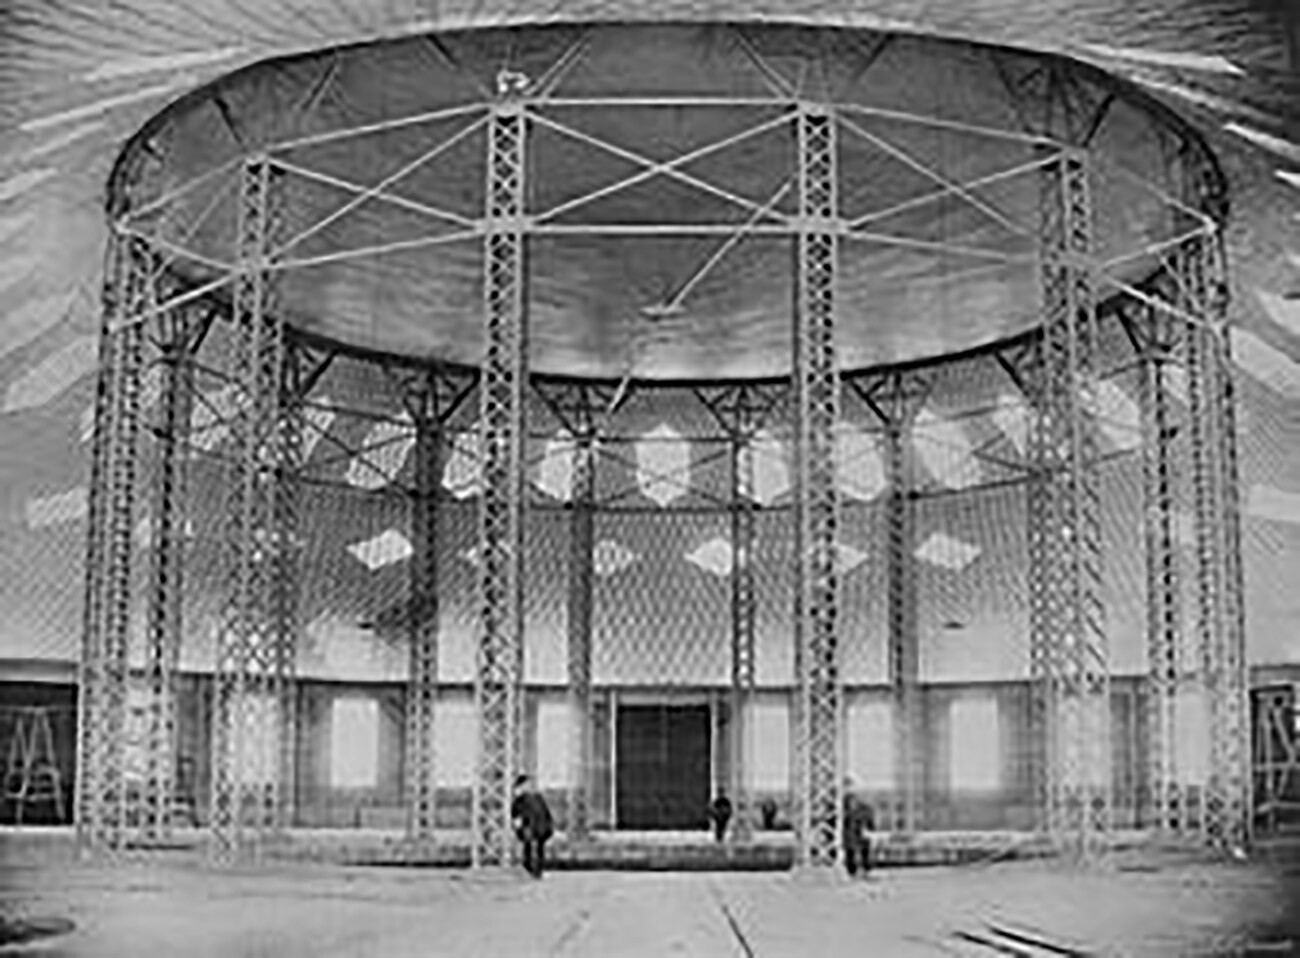 Prva jeklena membrana na svetu - Šuhova Rotunda, Nižni Novgorod, 1896